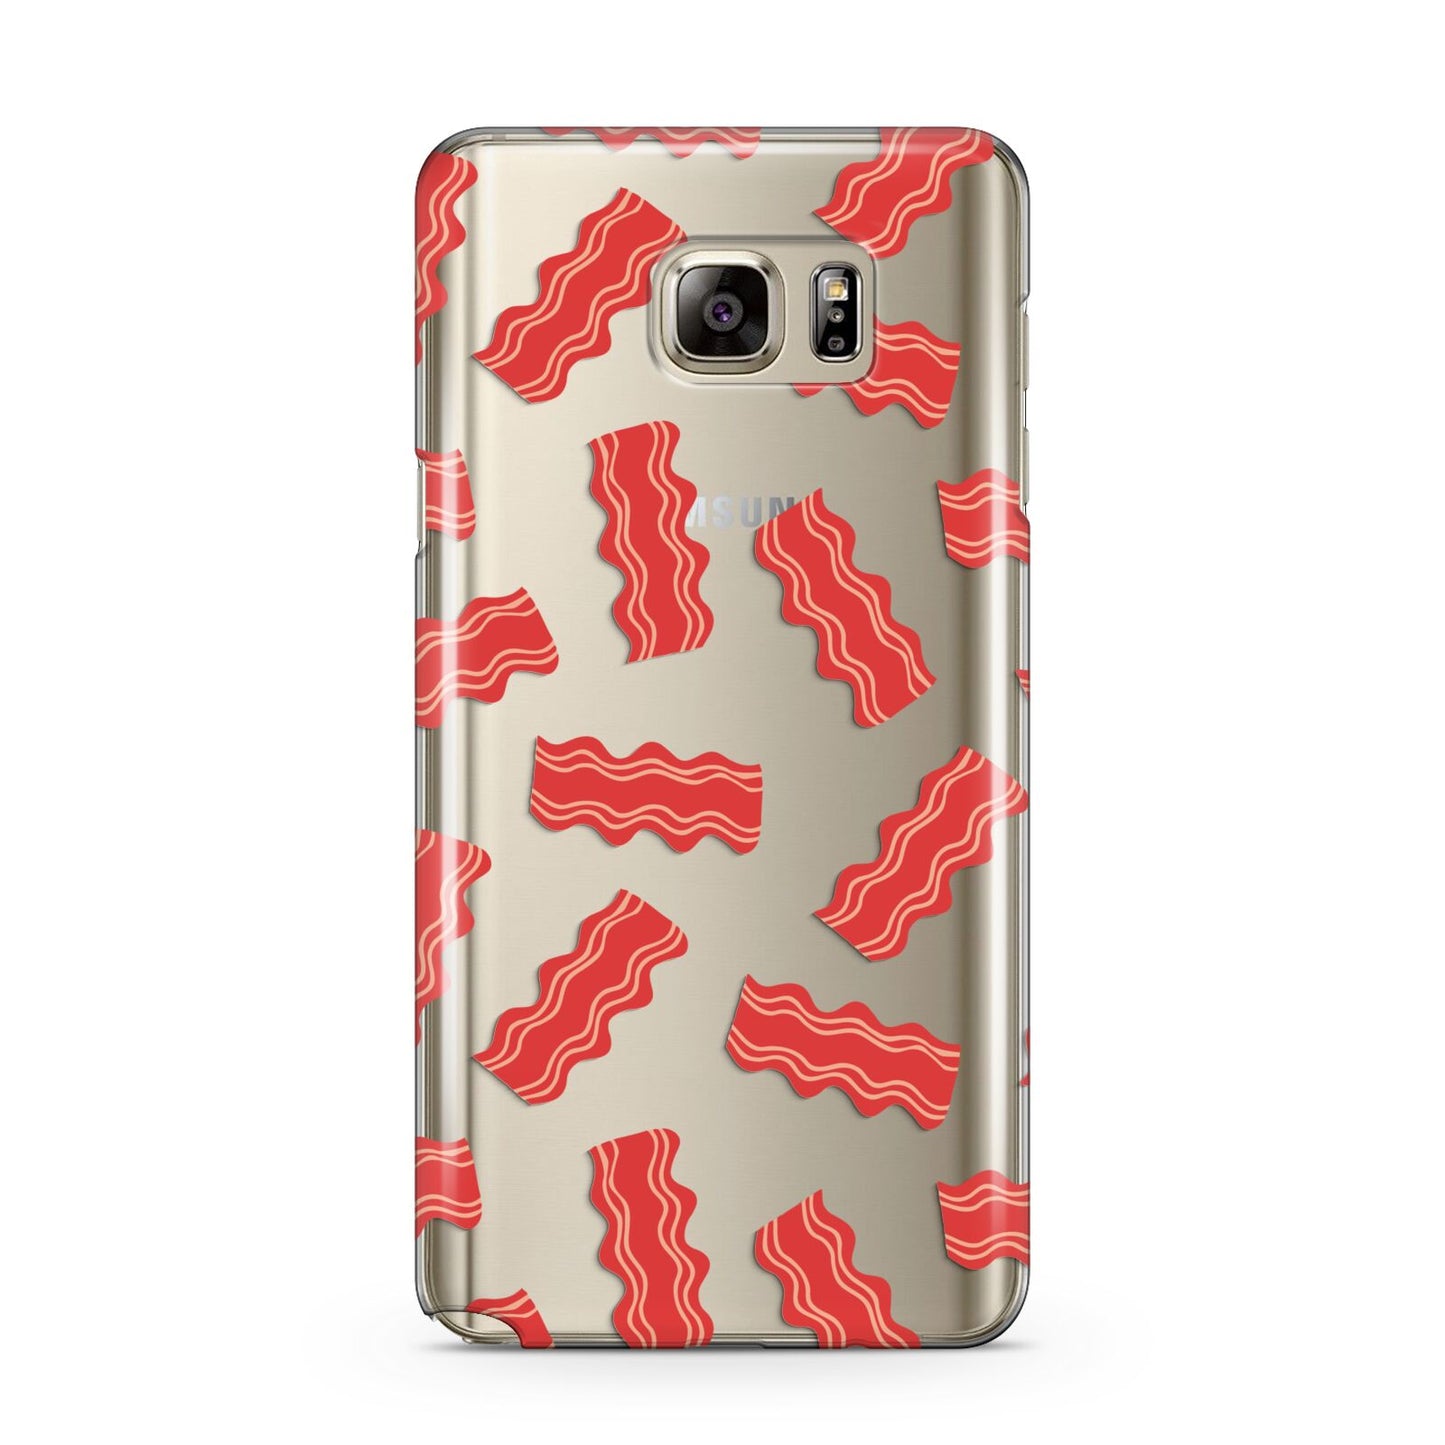 Bacon Samsung Galaxy Note 5 Case